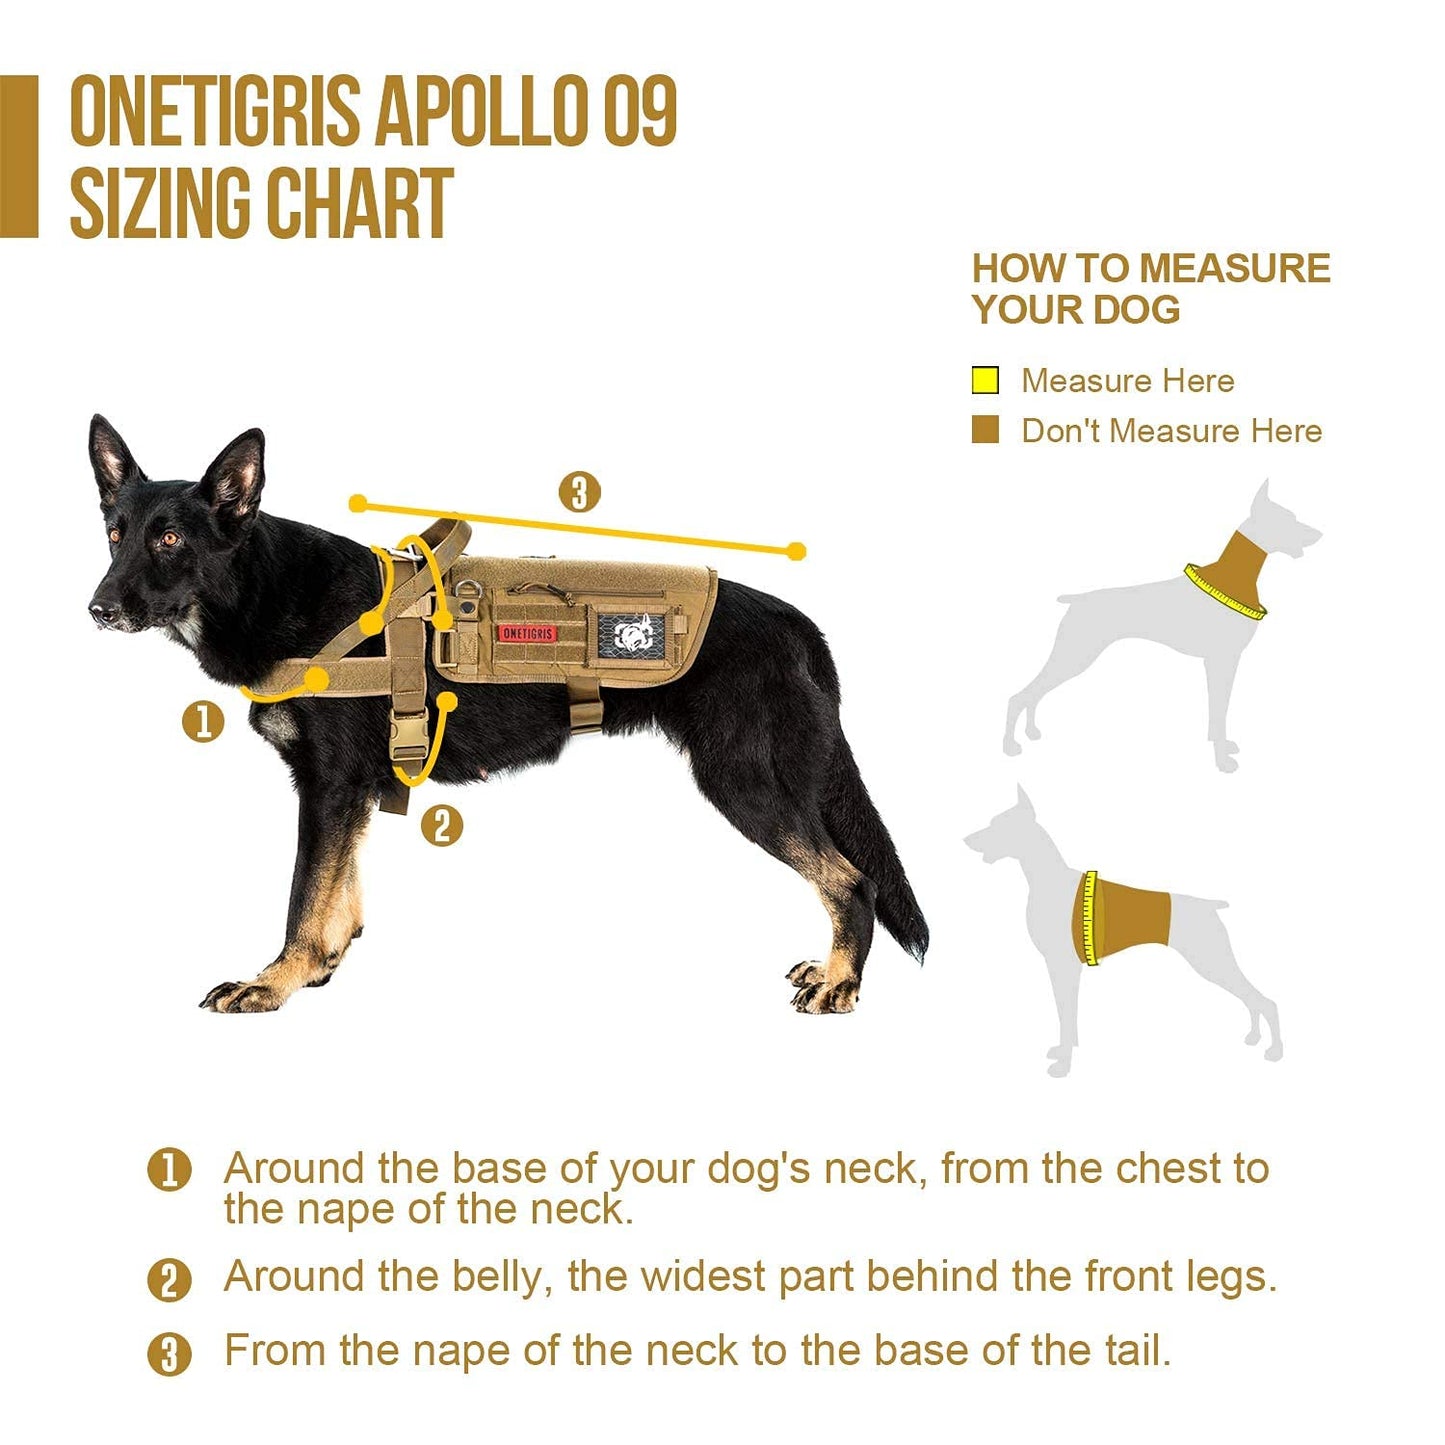 Service Dog Harness, Large Dog Harness Removable Neck Strap Compatible with Assistance Harness & Handle (Black, Short Version)